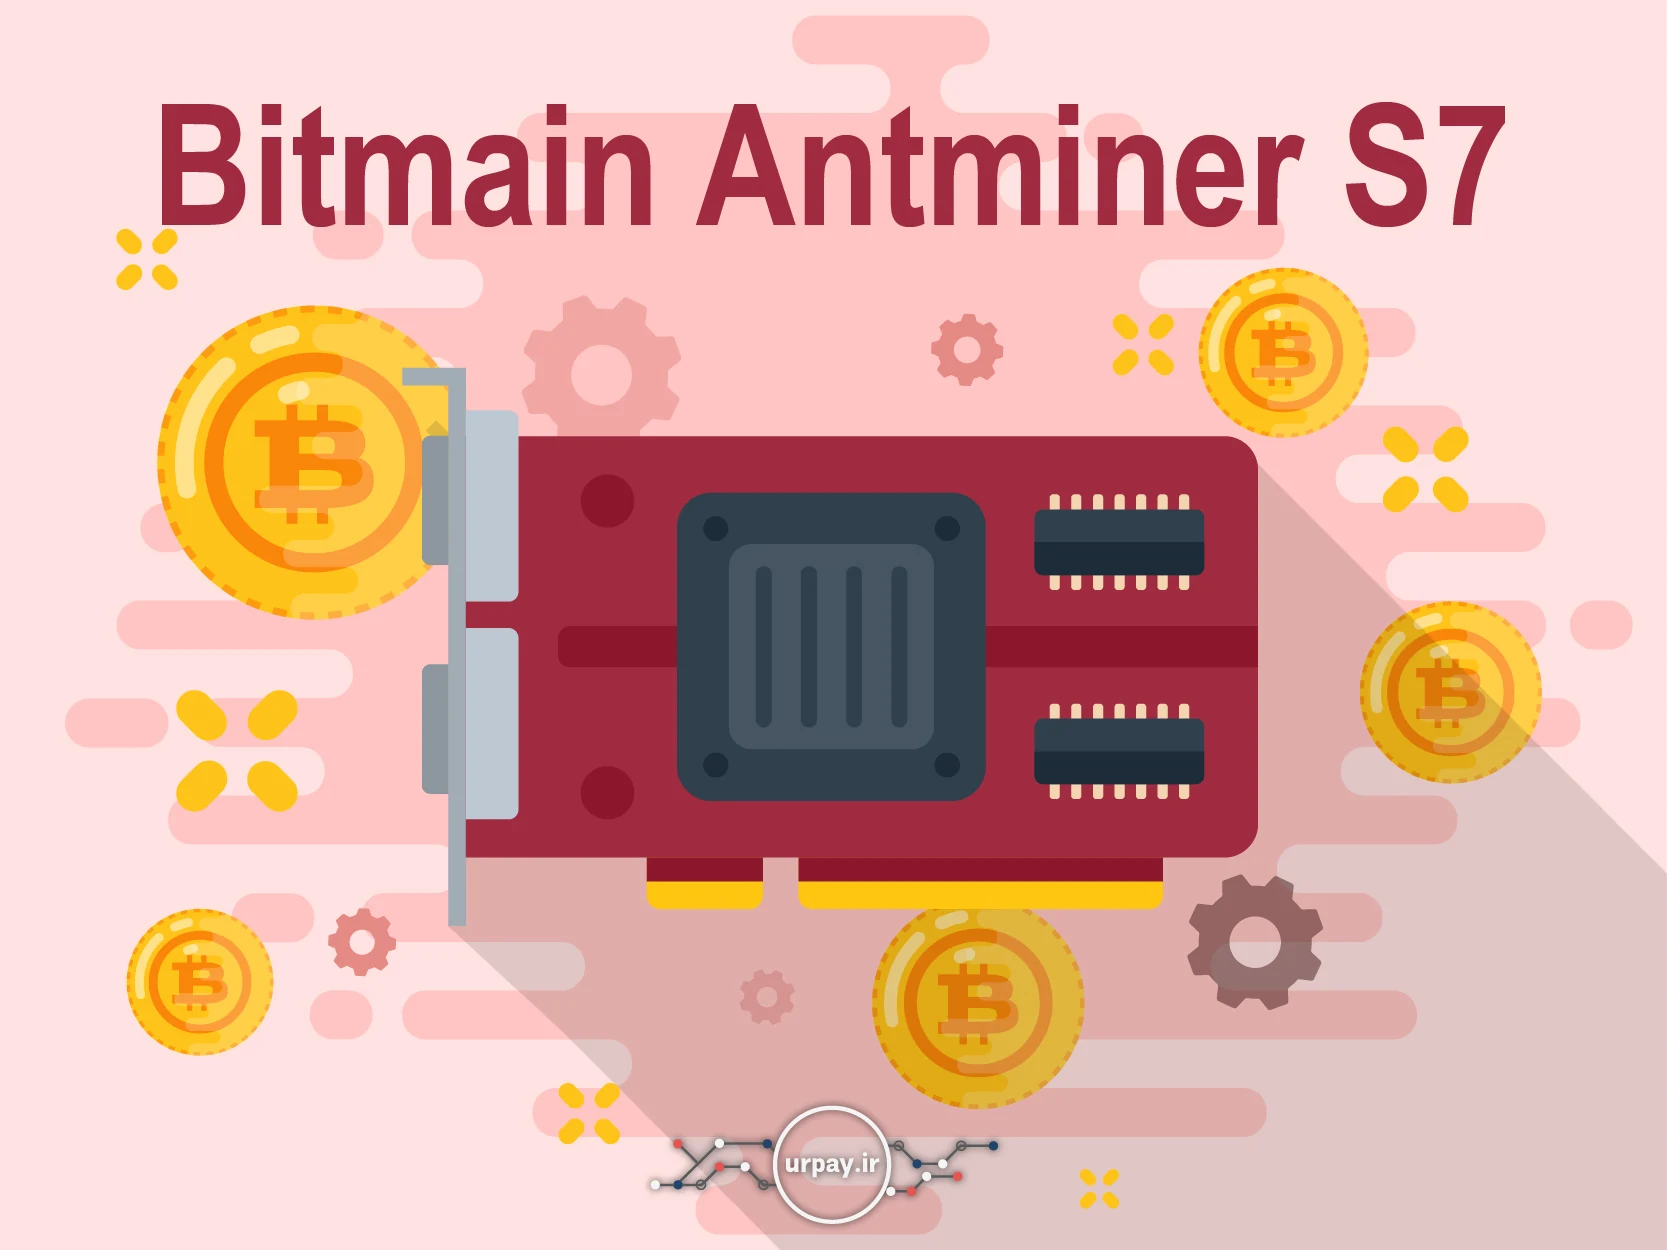 Bitmain Antminer S7 دستگاه مناسبی برای استخراج بیت کوین است.